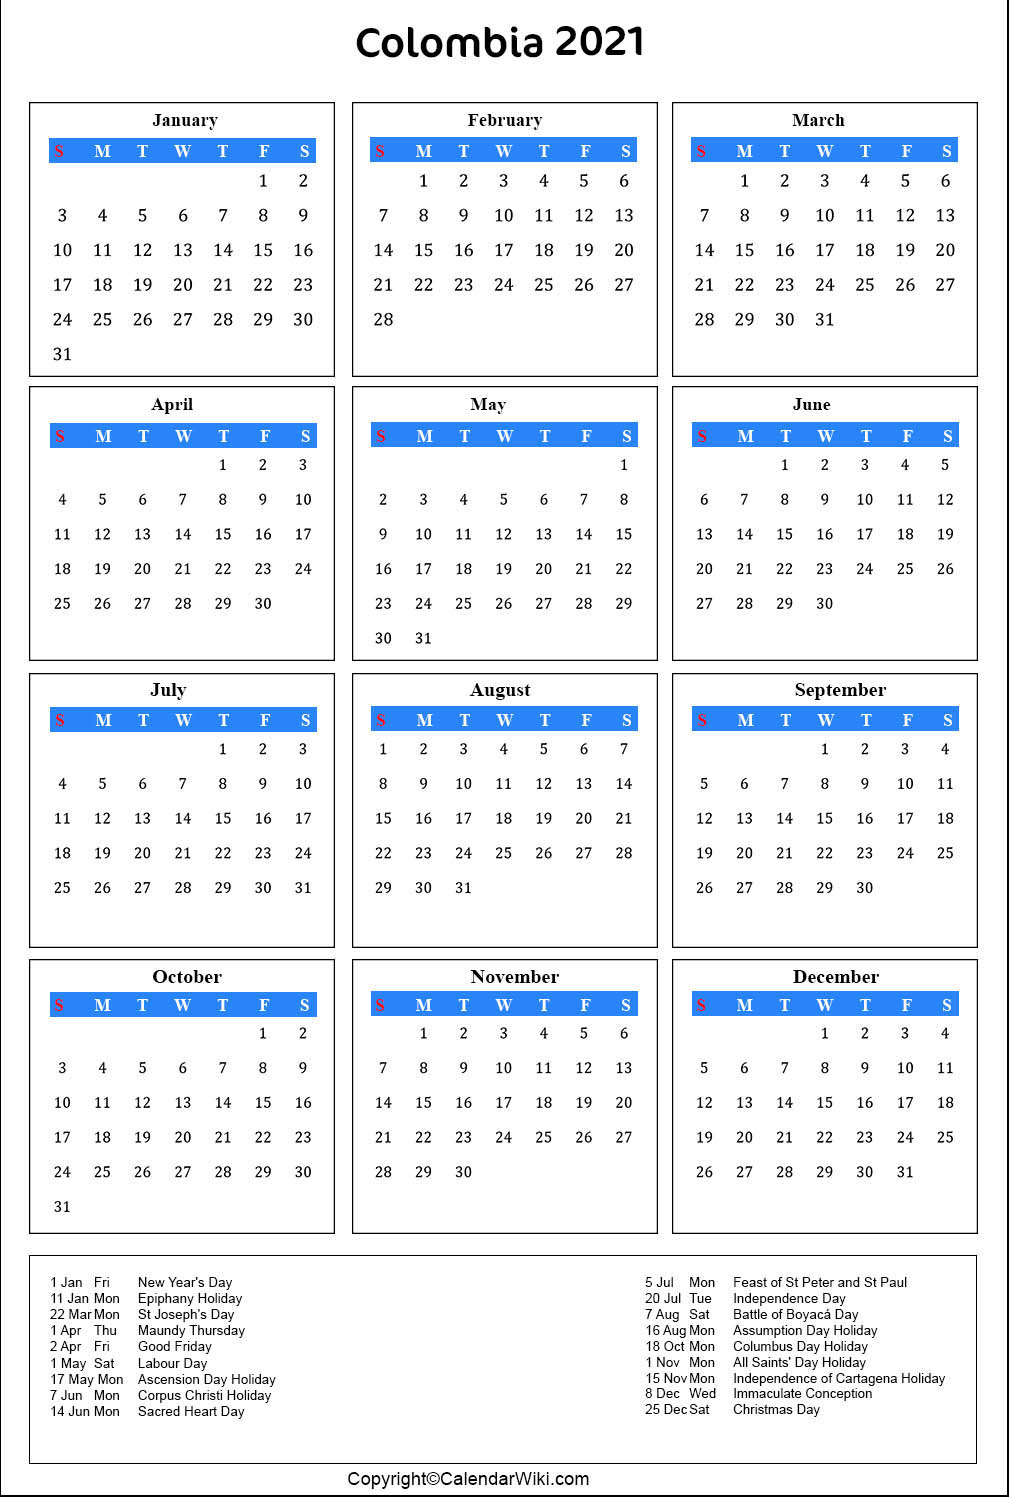 Colombia Calendar 2021